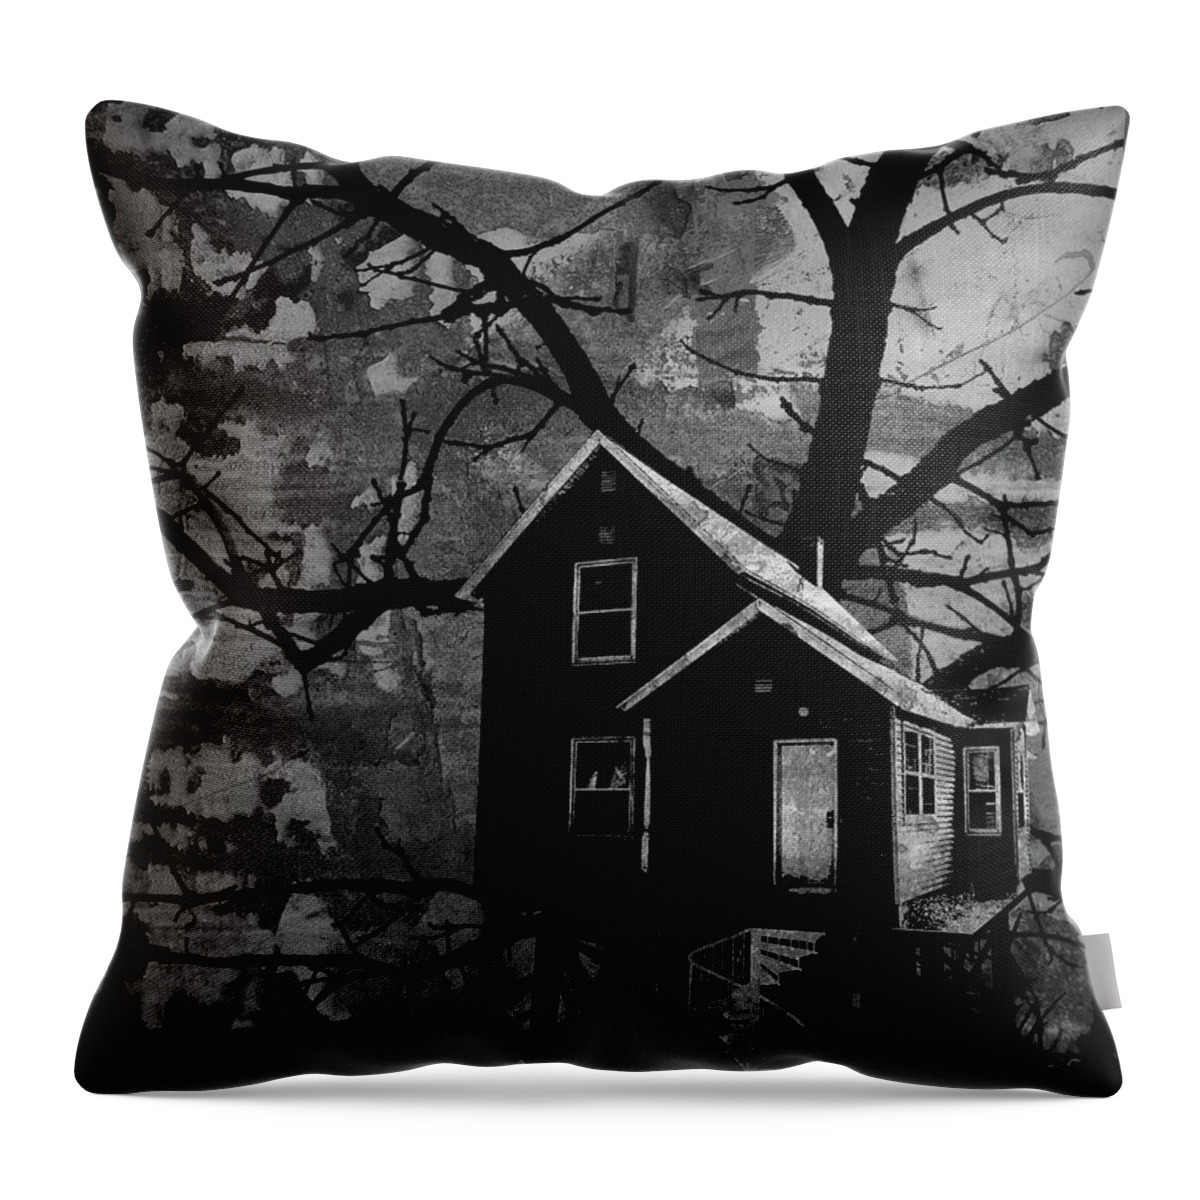 Jason Casteel Throw Pillow featuring the digital art Treehouse II by Jason Casteel